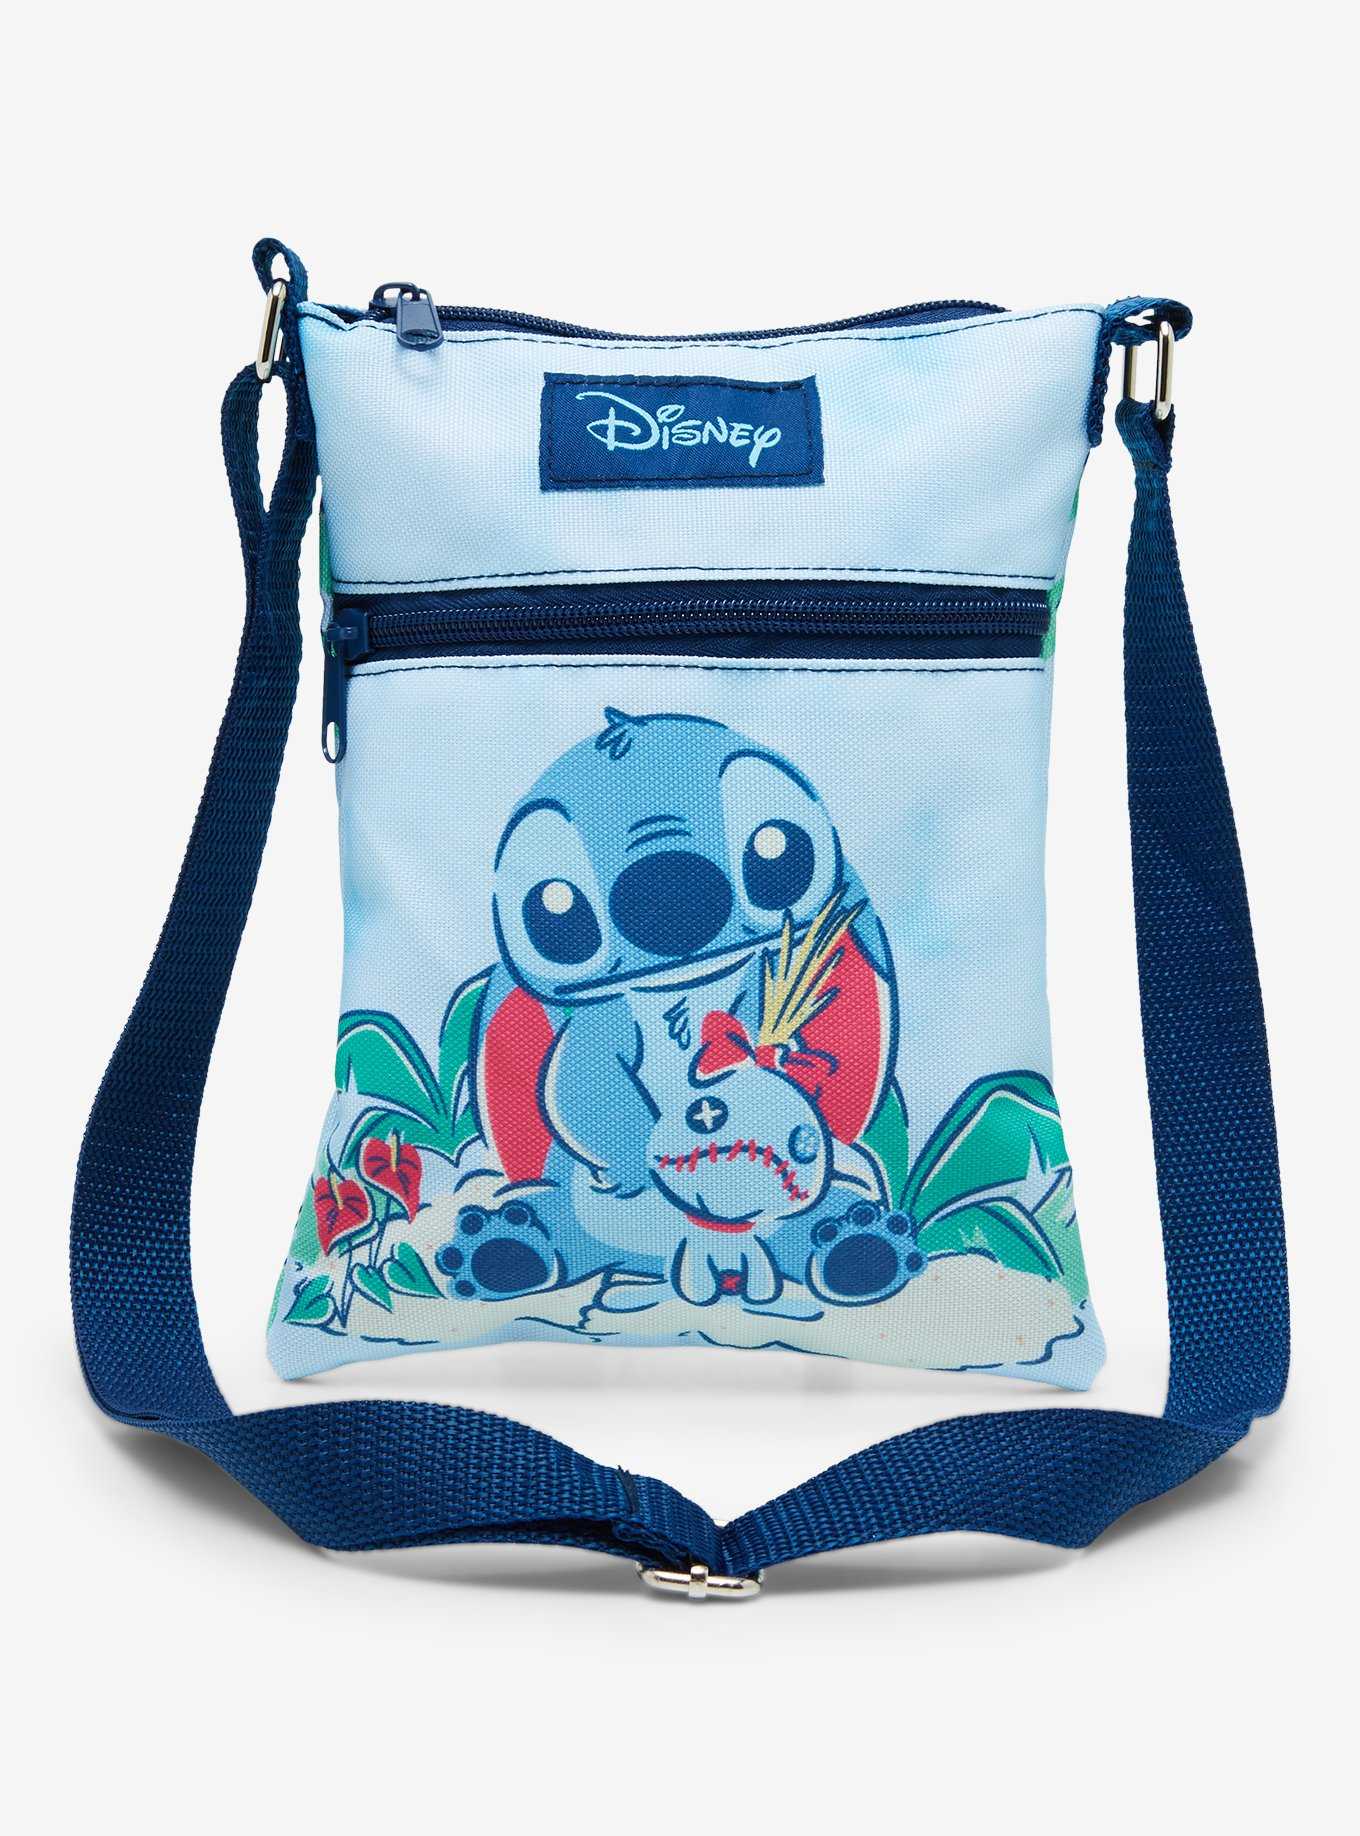 Disney Lilo and Stitch Handbag - Girls, Boys, Teens, Adults - Officially Licensed Stitch Faux Leather Cosplay Mini Crossbody Handbag